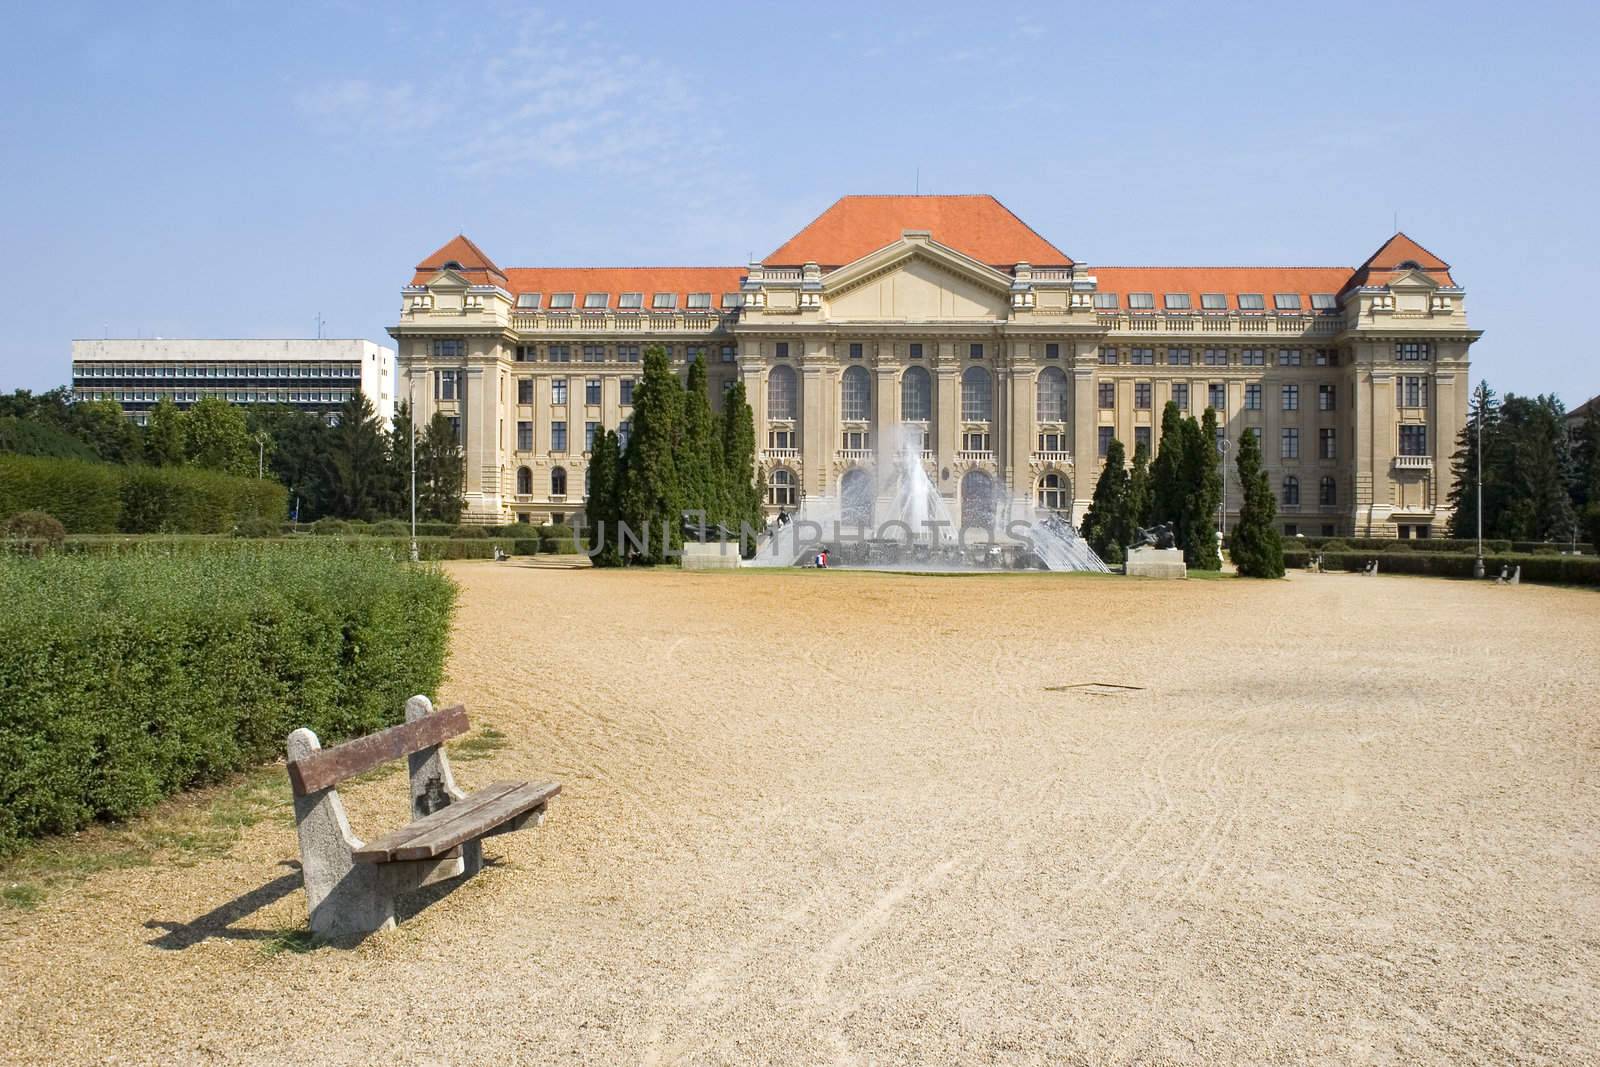 Main entrance of Debrecen University, Hungary at summer time